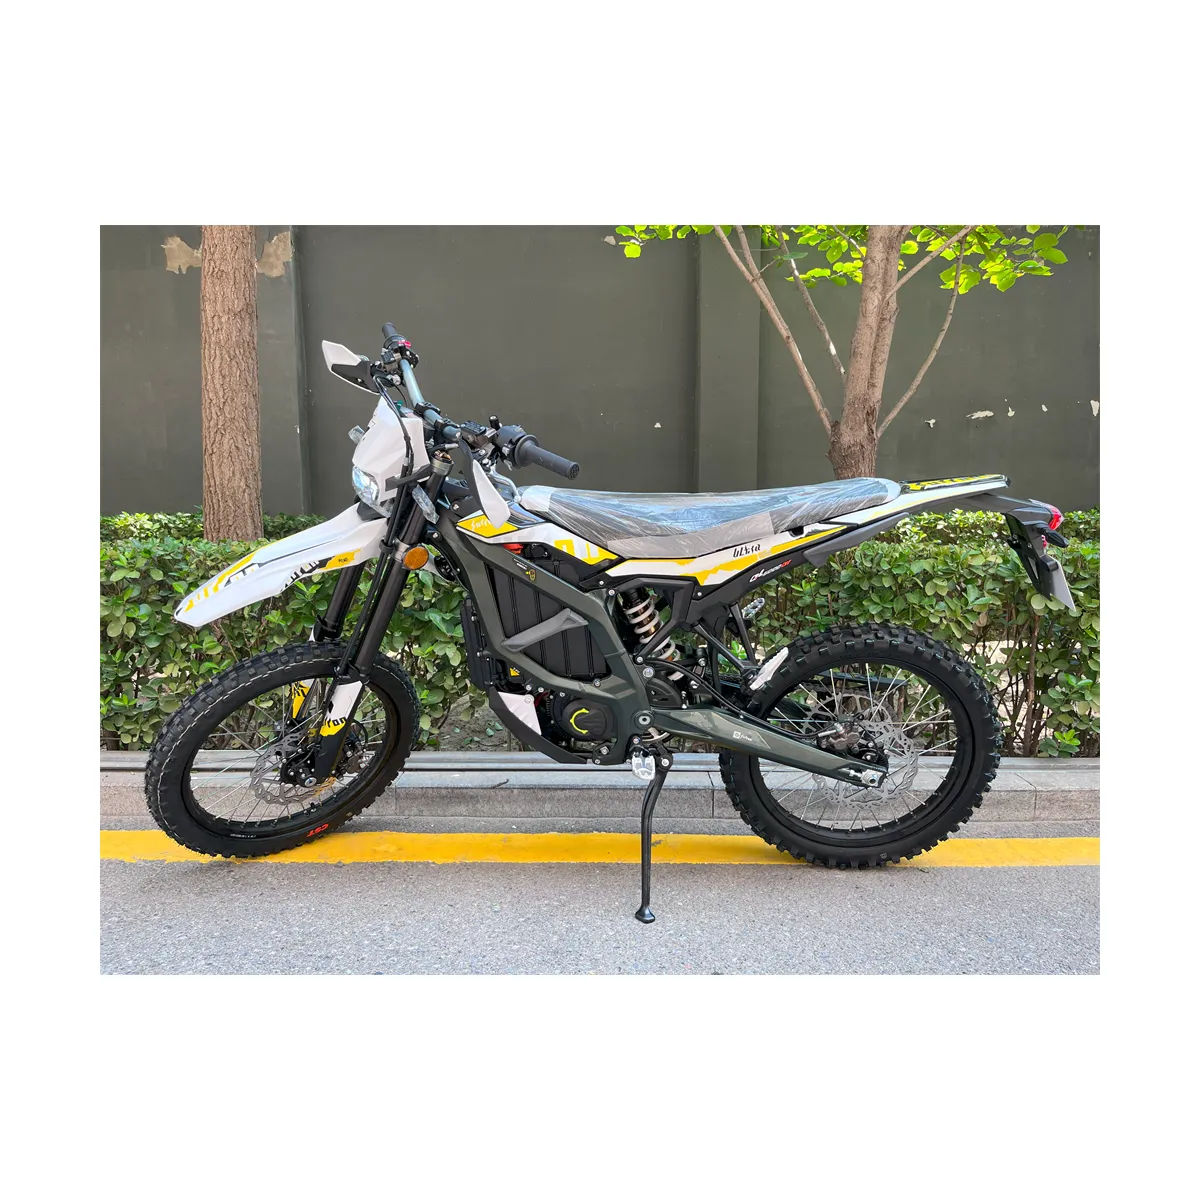 Suron UltraBee 74V 12.5kw 55ah Motocicleta eléctrica Off Road Moto E Bicicleta Eléctrica Dirt Bike